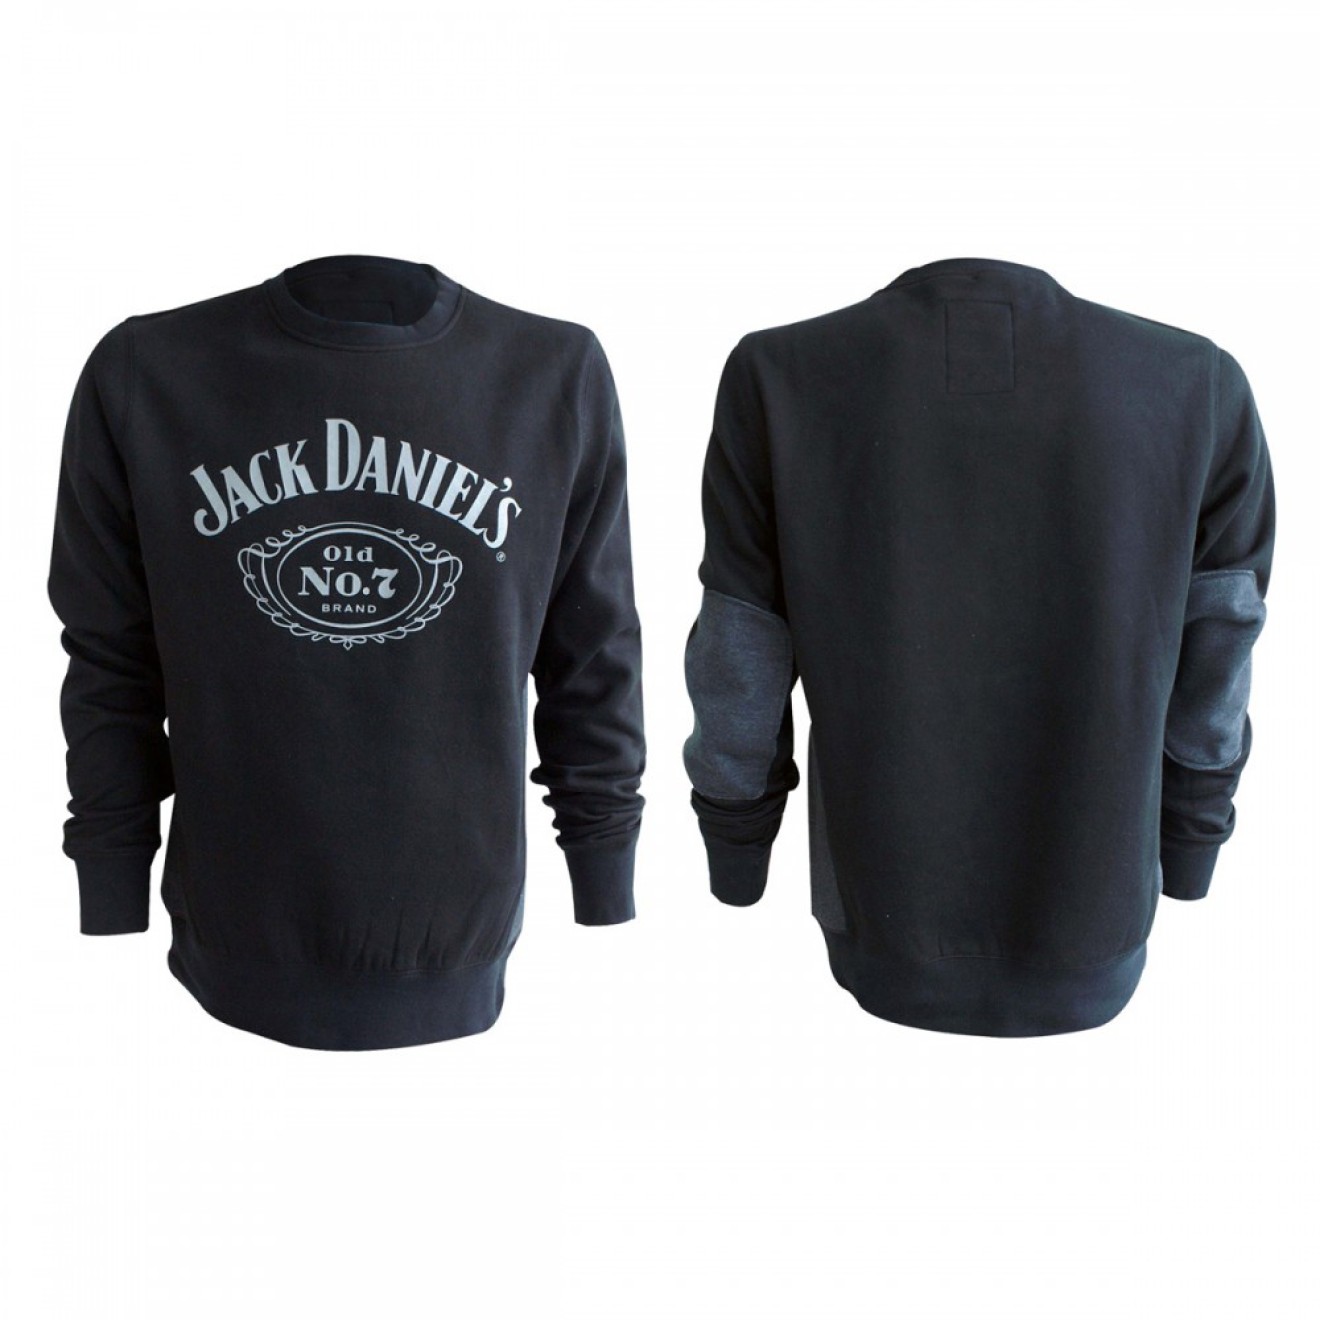 Jack Daniels Sweater Old No. 7 Black